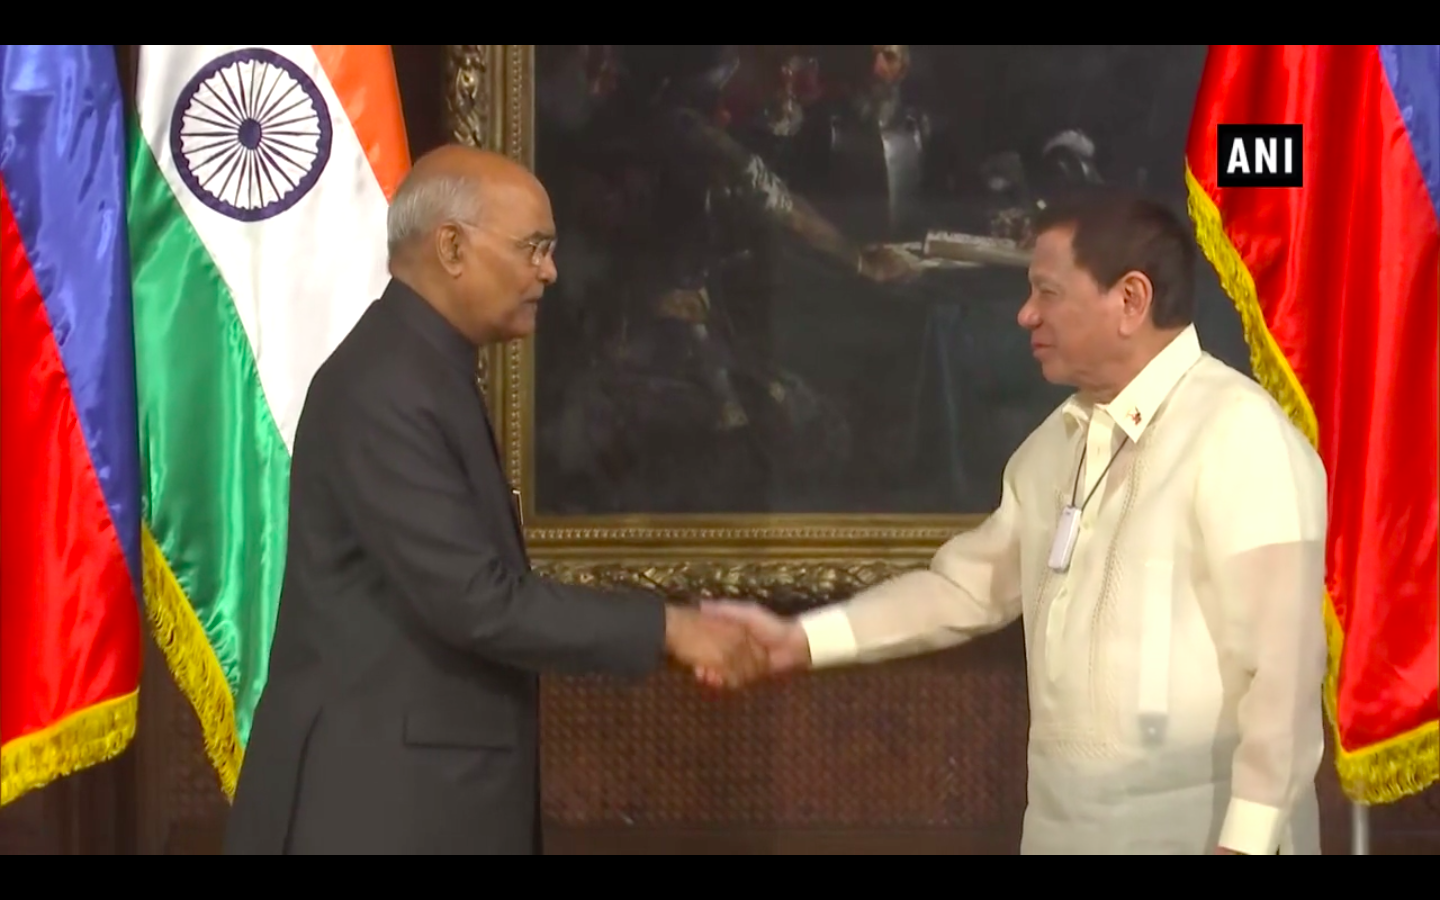 Photo Caption: President Ram Nath Kovind shake hands with Philippine counterpart Rodrigo Duterte.